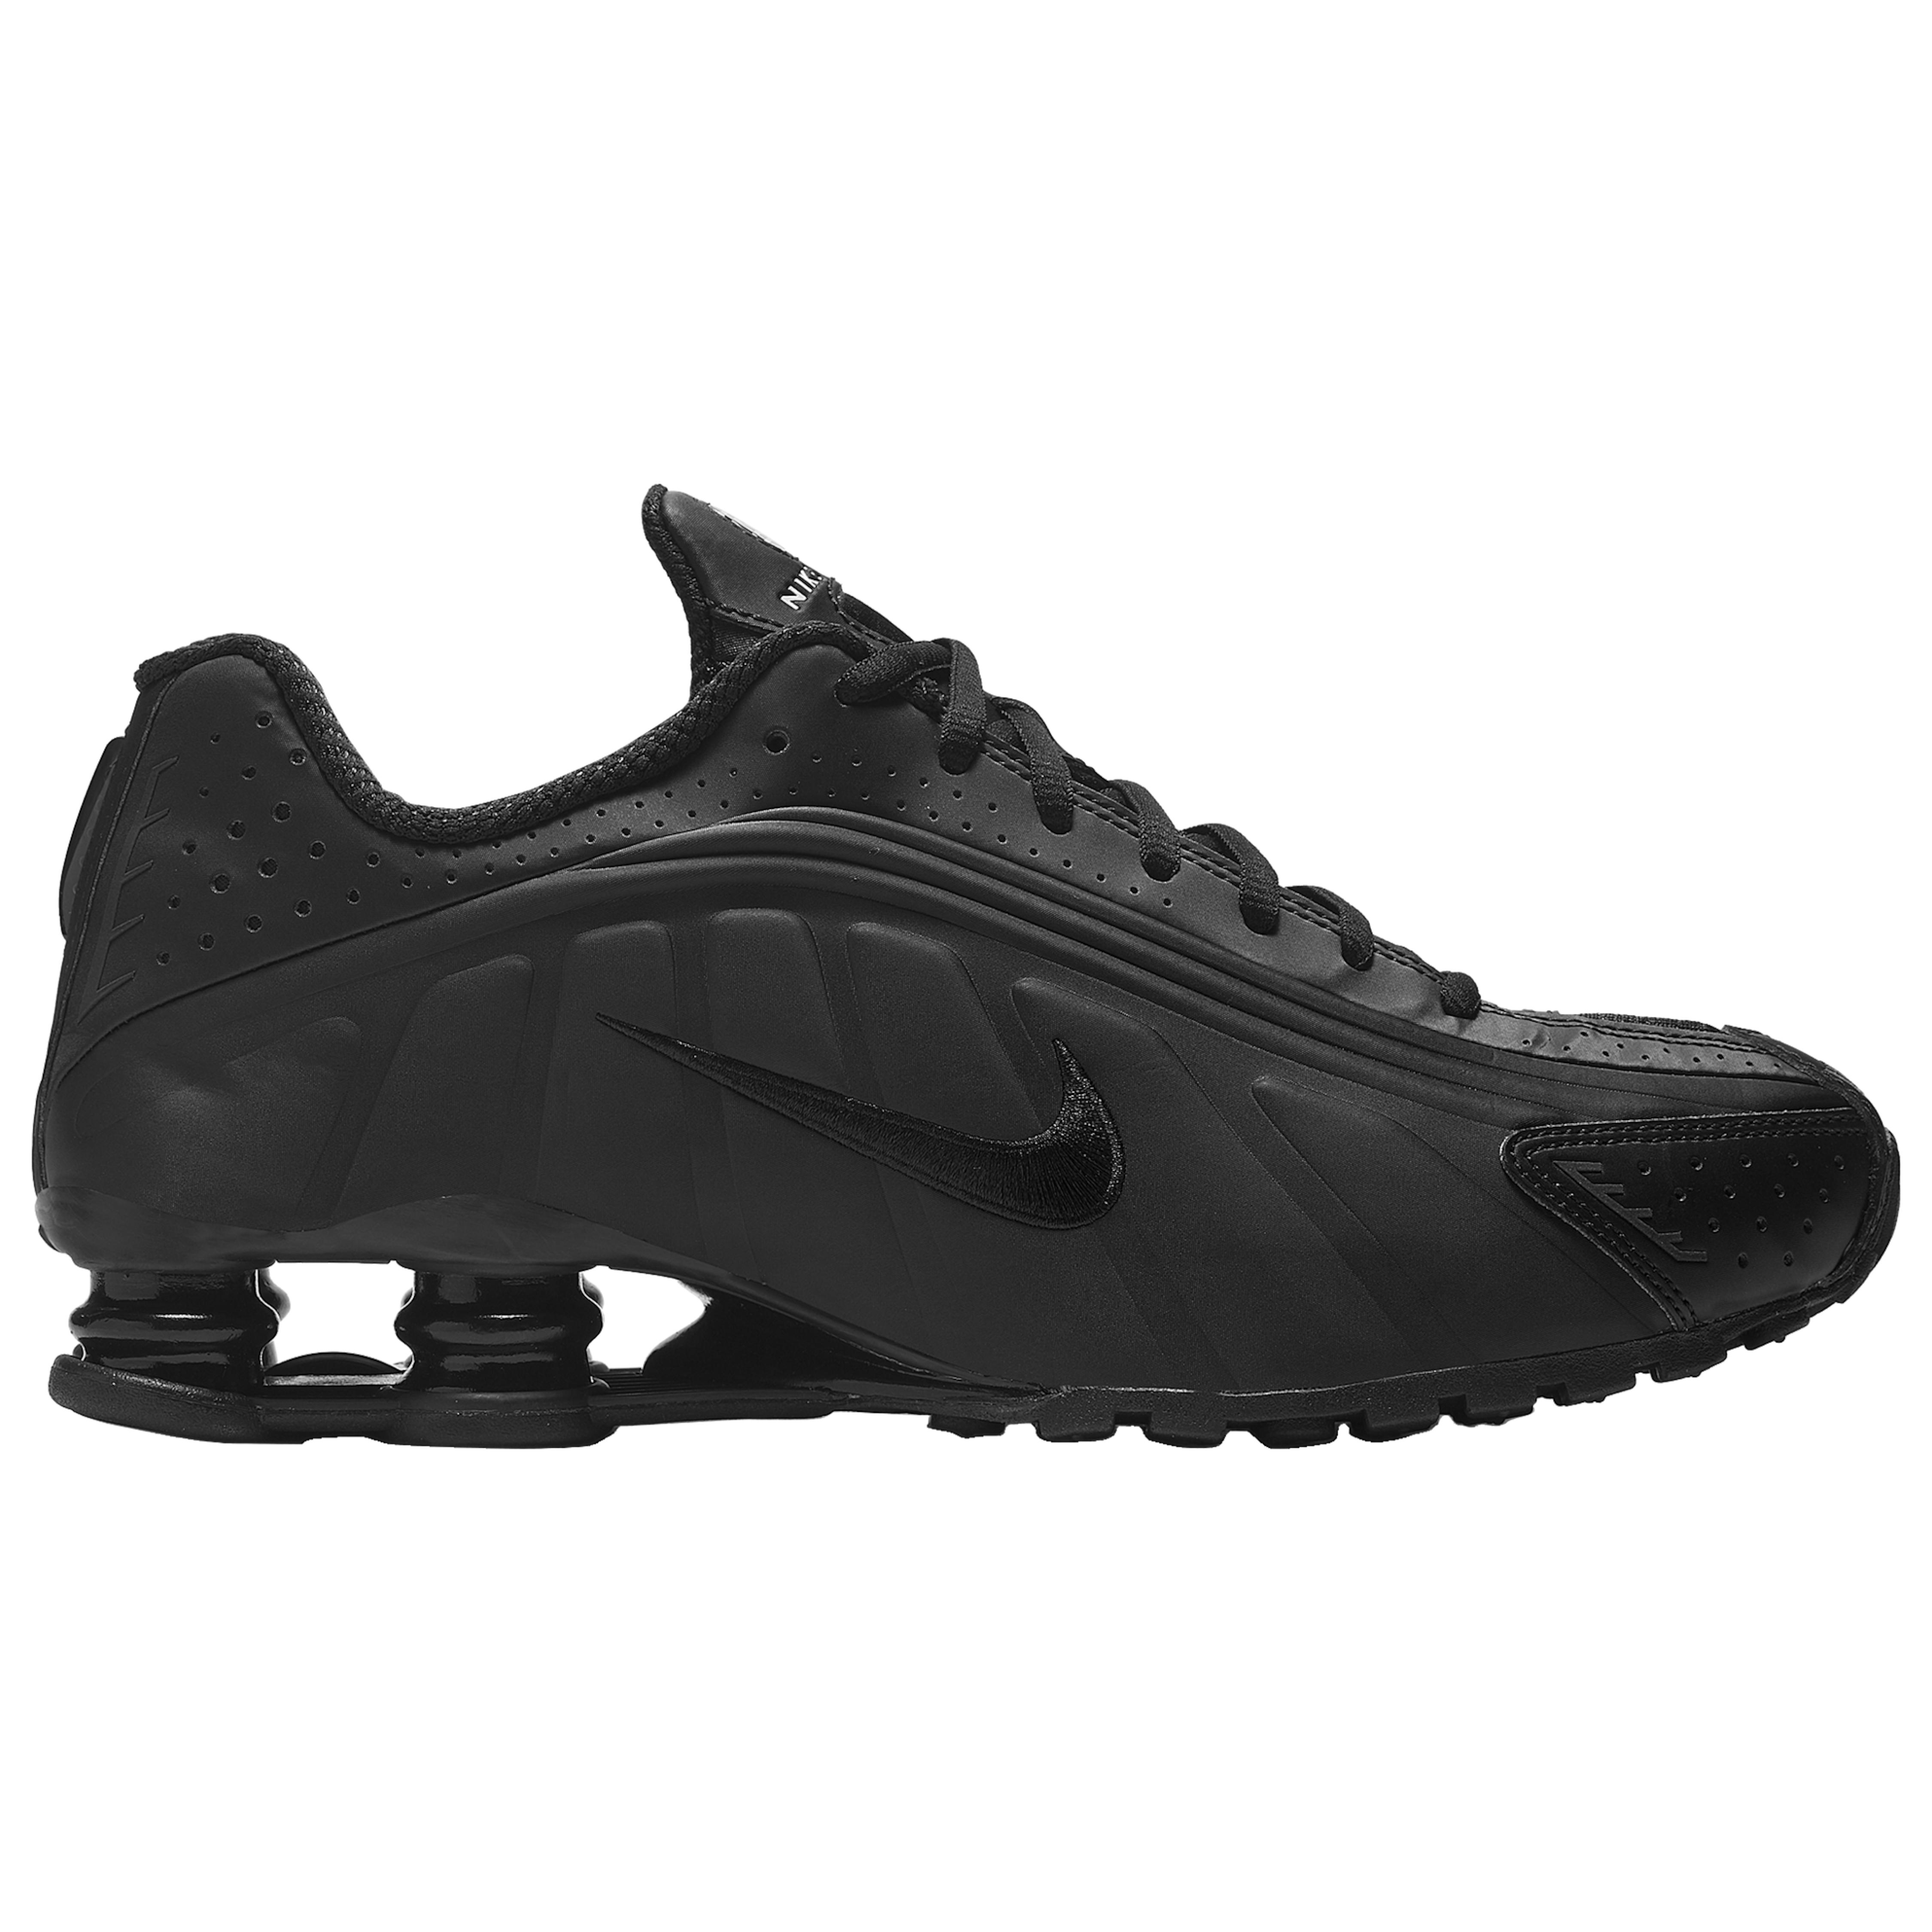 Nike Synthetic Shox R4 in Black/Black/Black (Black) for Men - Lyst